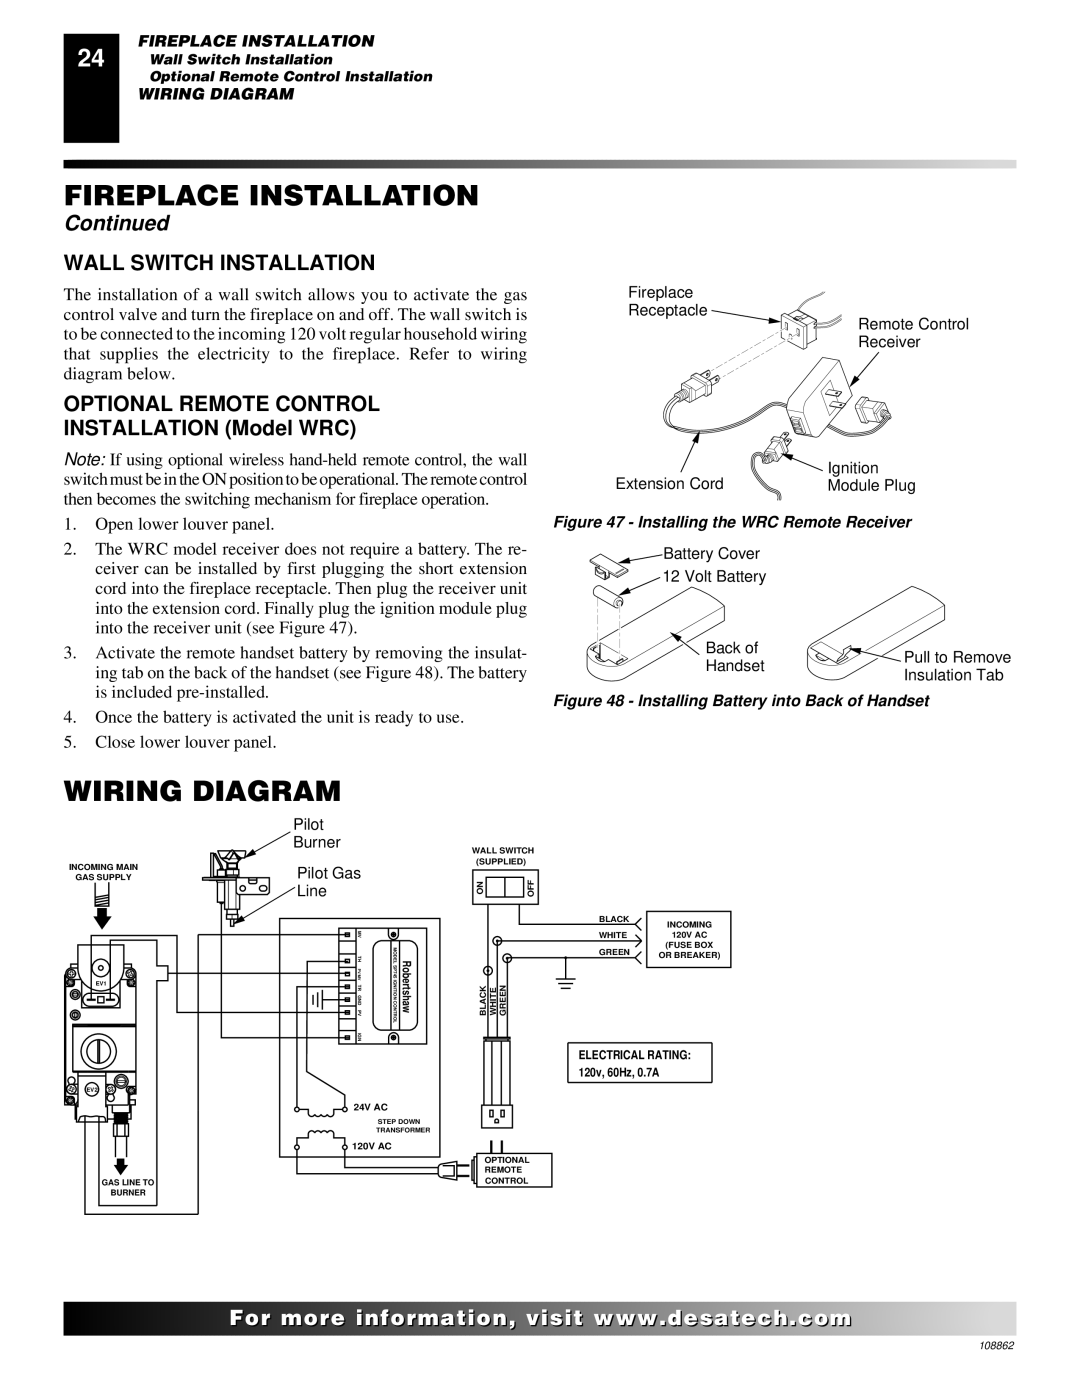 Desa (V)V36EN installation manual Wiring Diagram, Wall Switch Installation, Optional Remote Control 